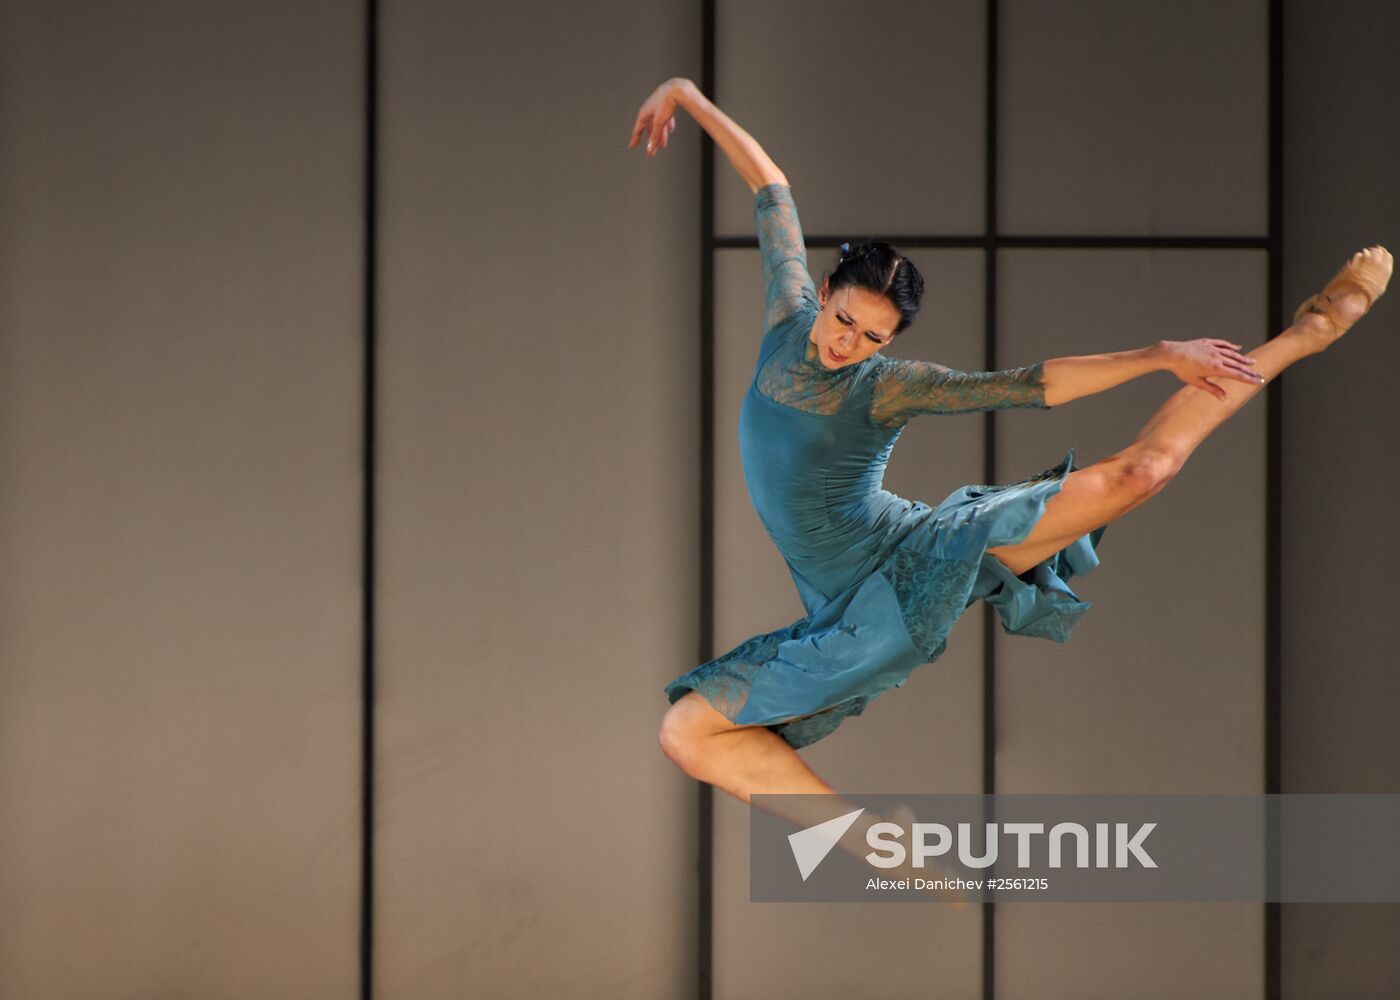 Dress rehearsal of Boris Eifman's ballet "Up & Down"